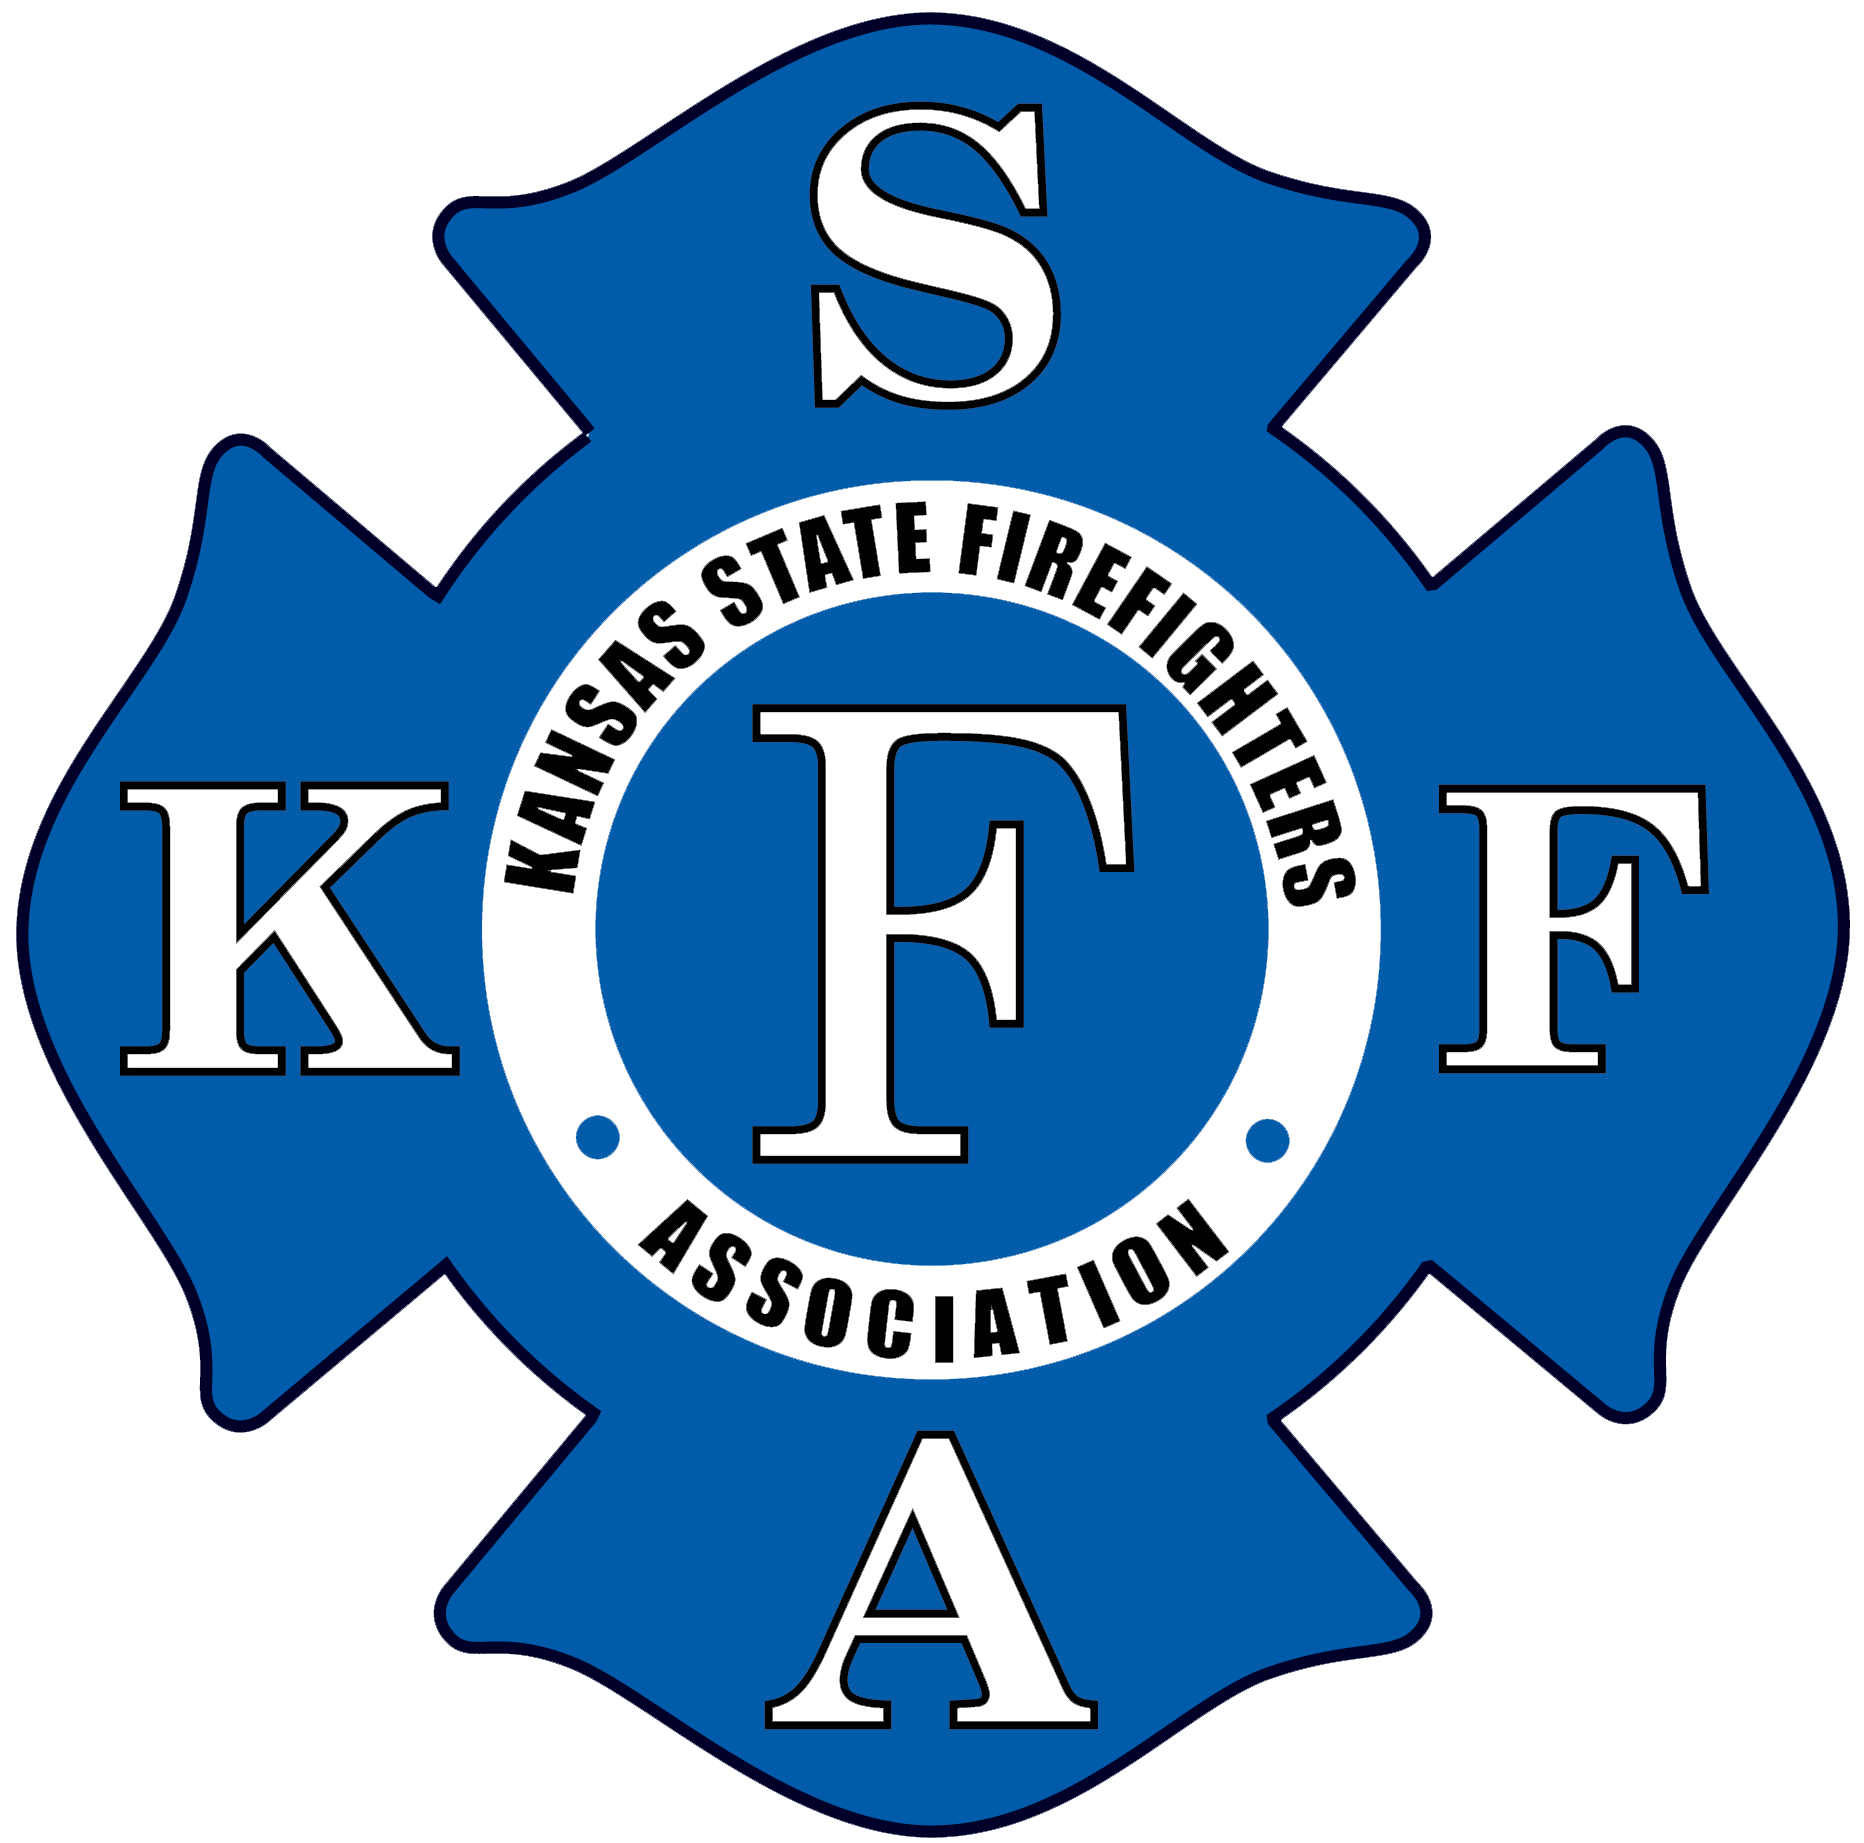 KANSAS STATE FIREFIGHTERS ASSOCIATION